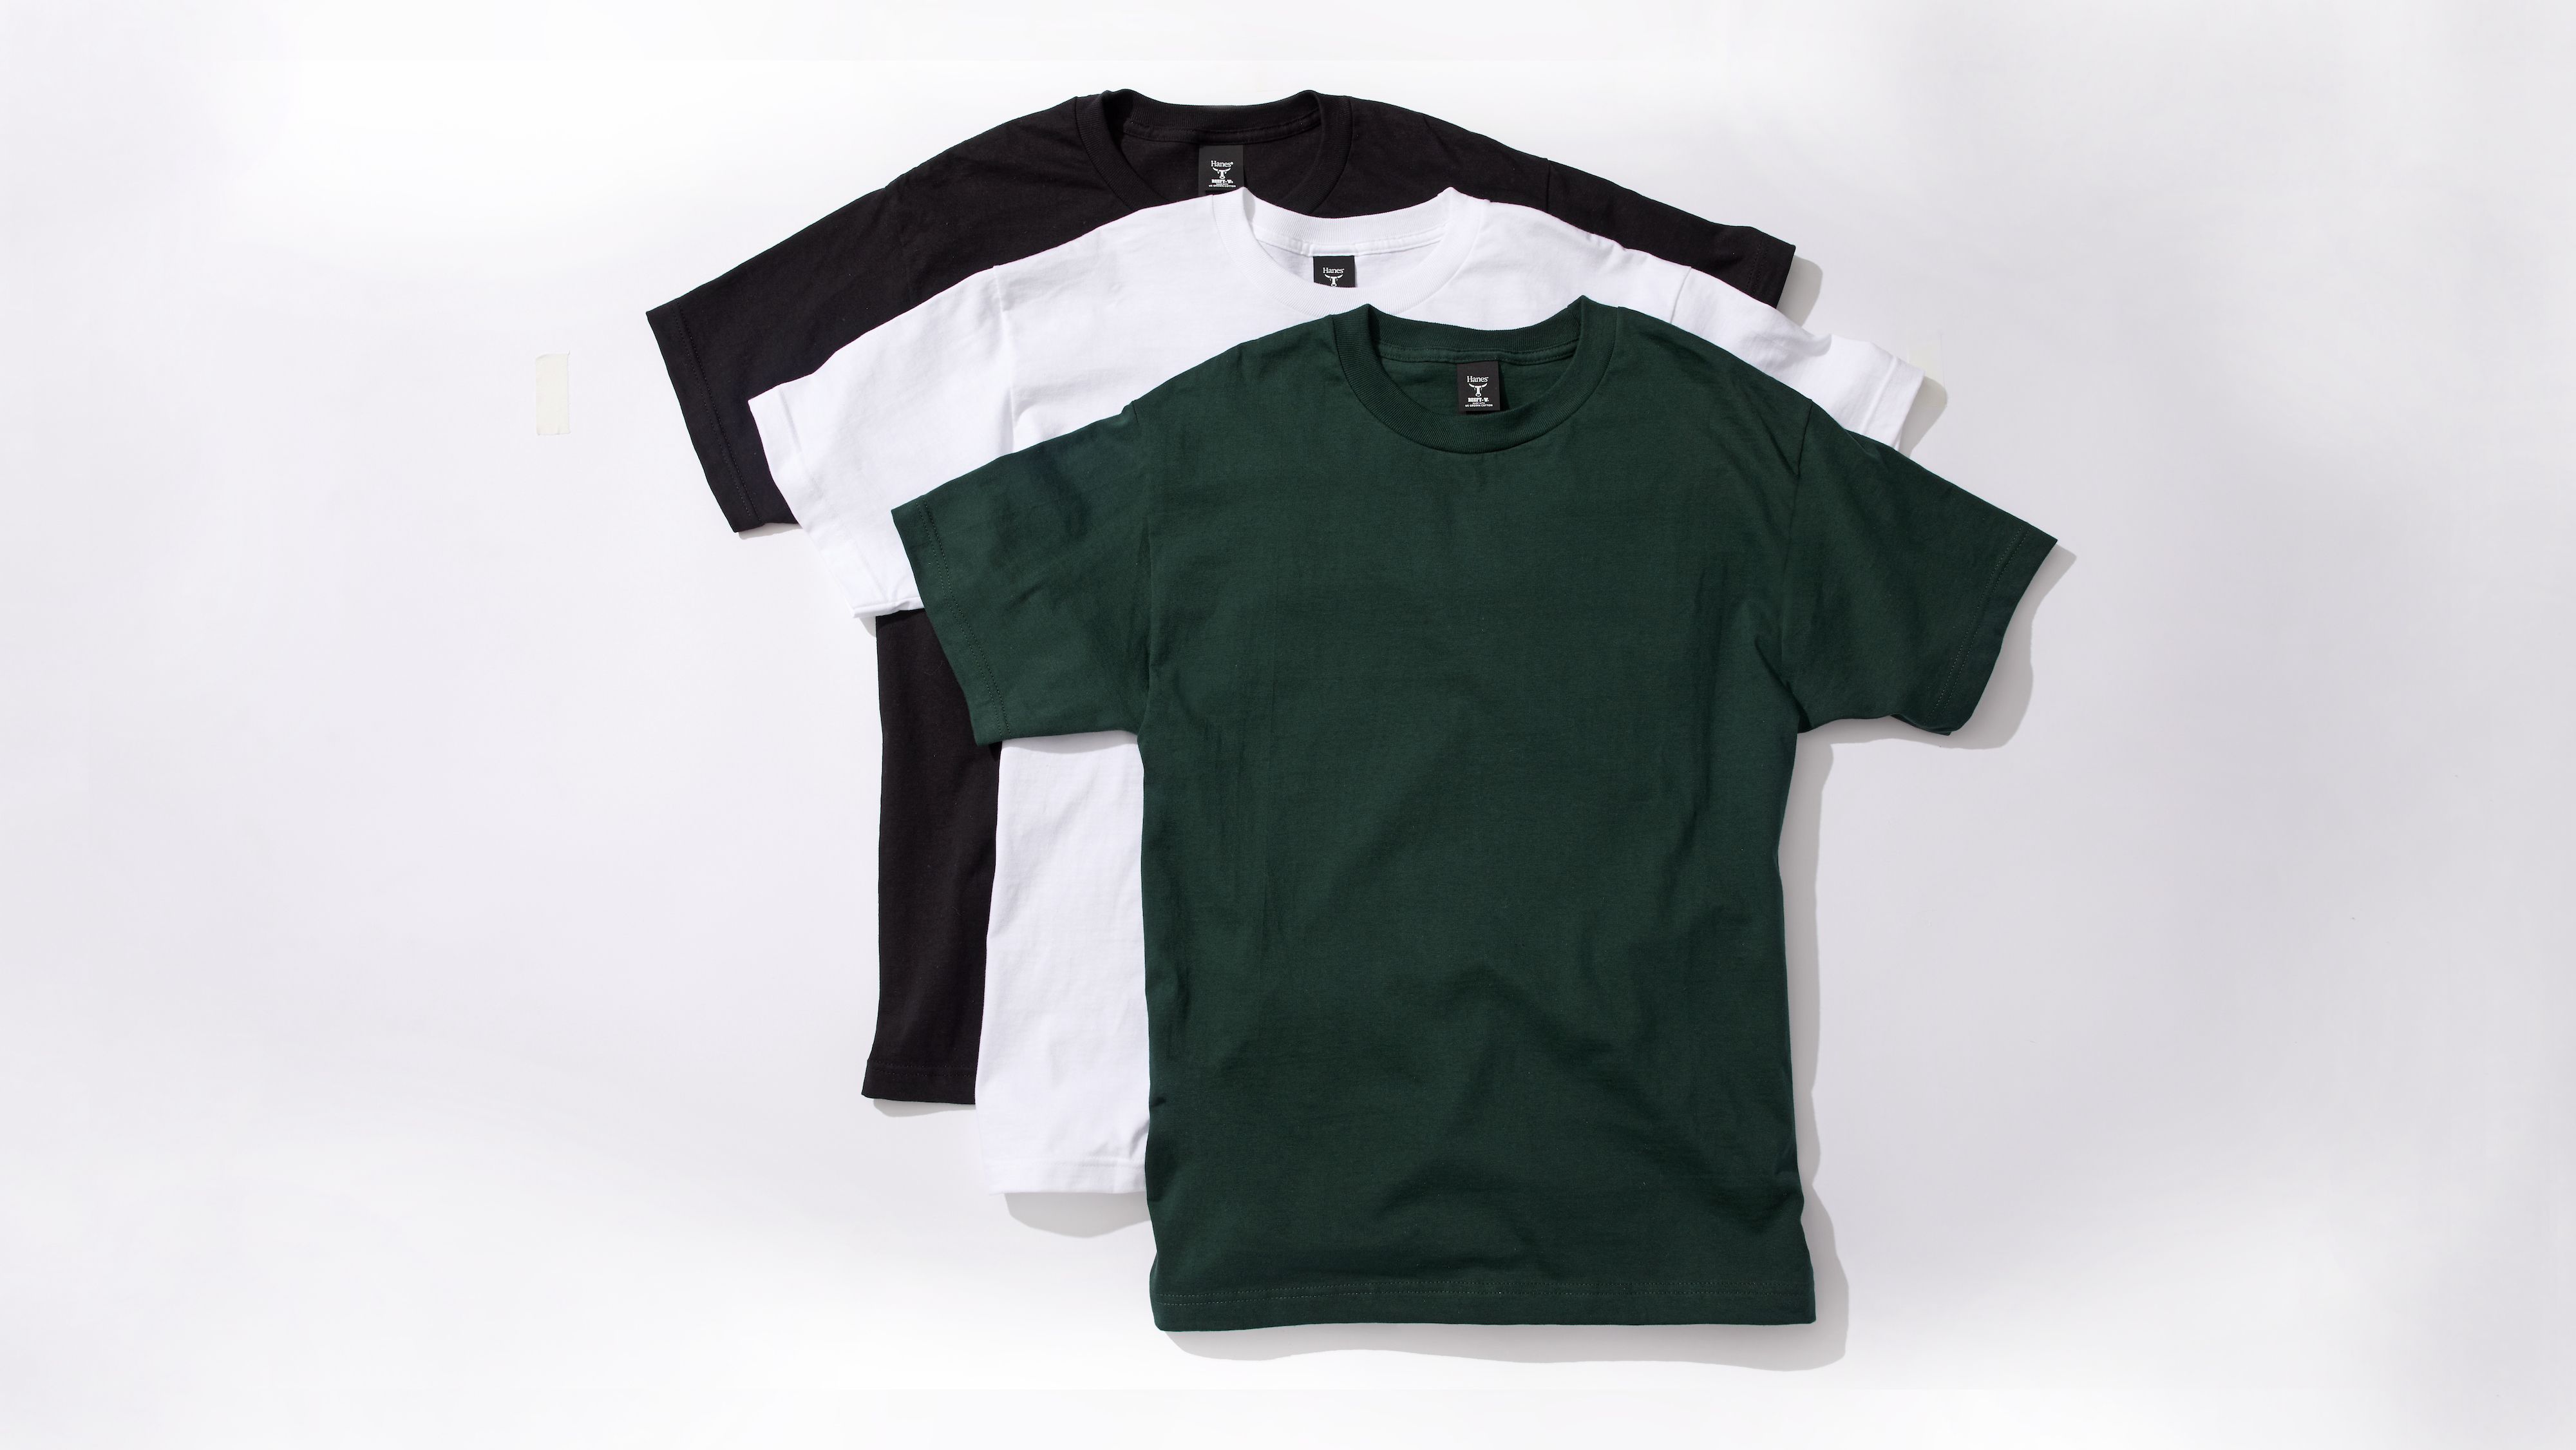 Hanes Men's 100 Percent Cotton Crew Neck T-Shirt - 5180 